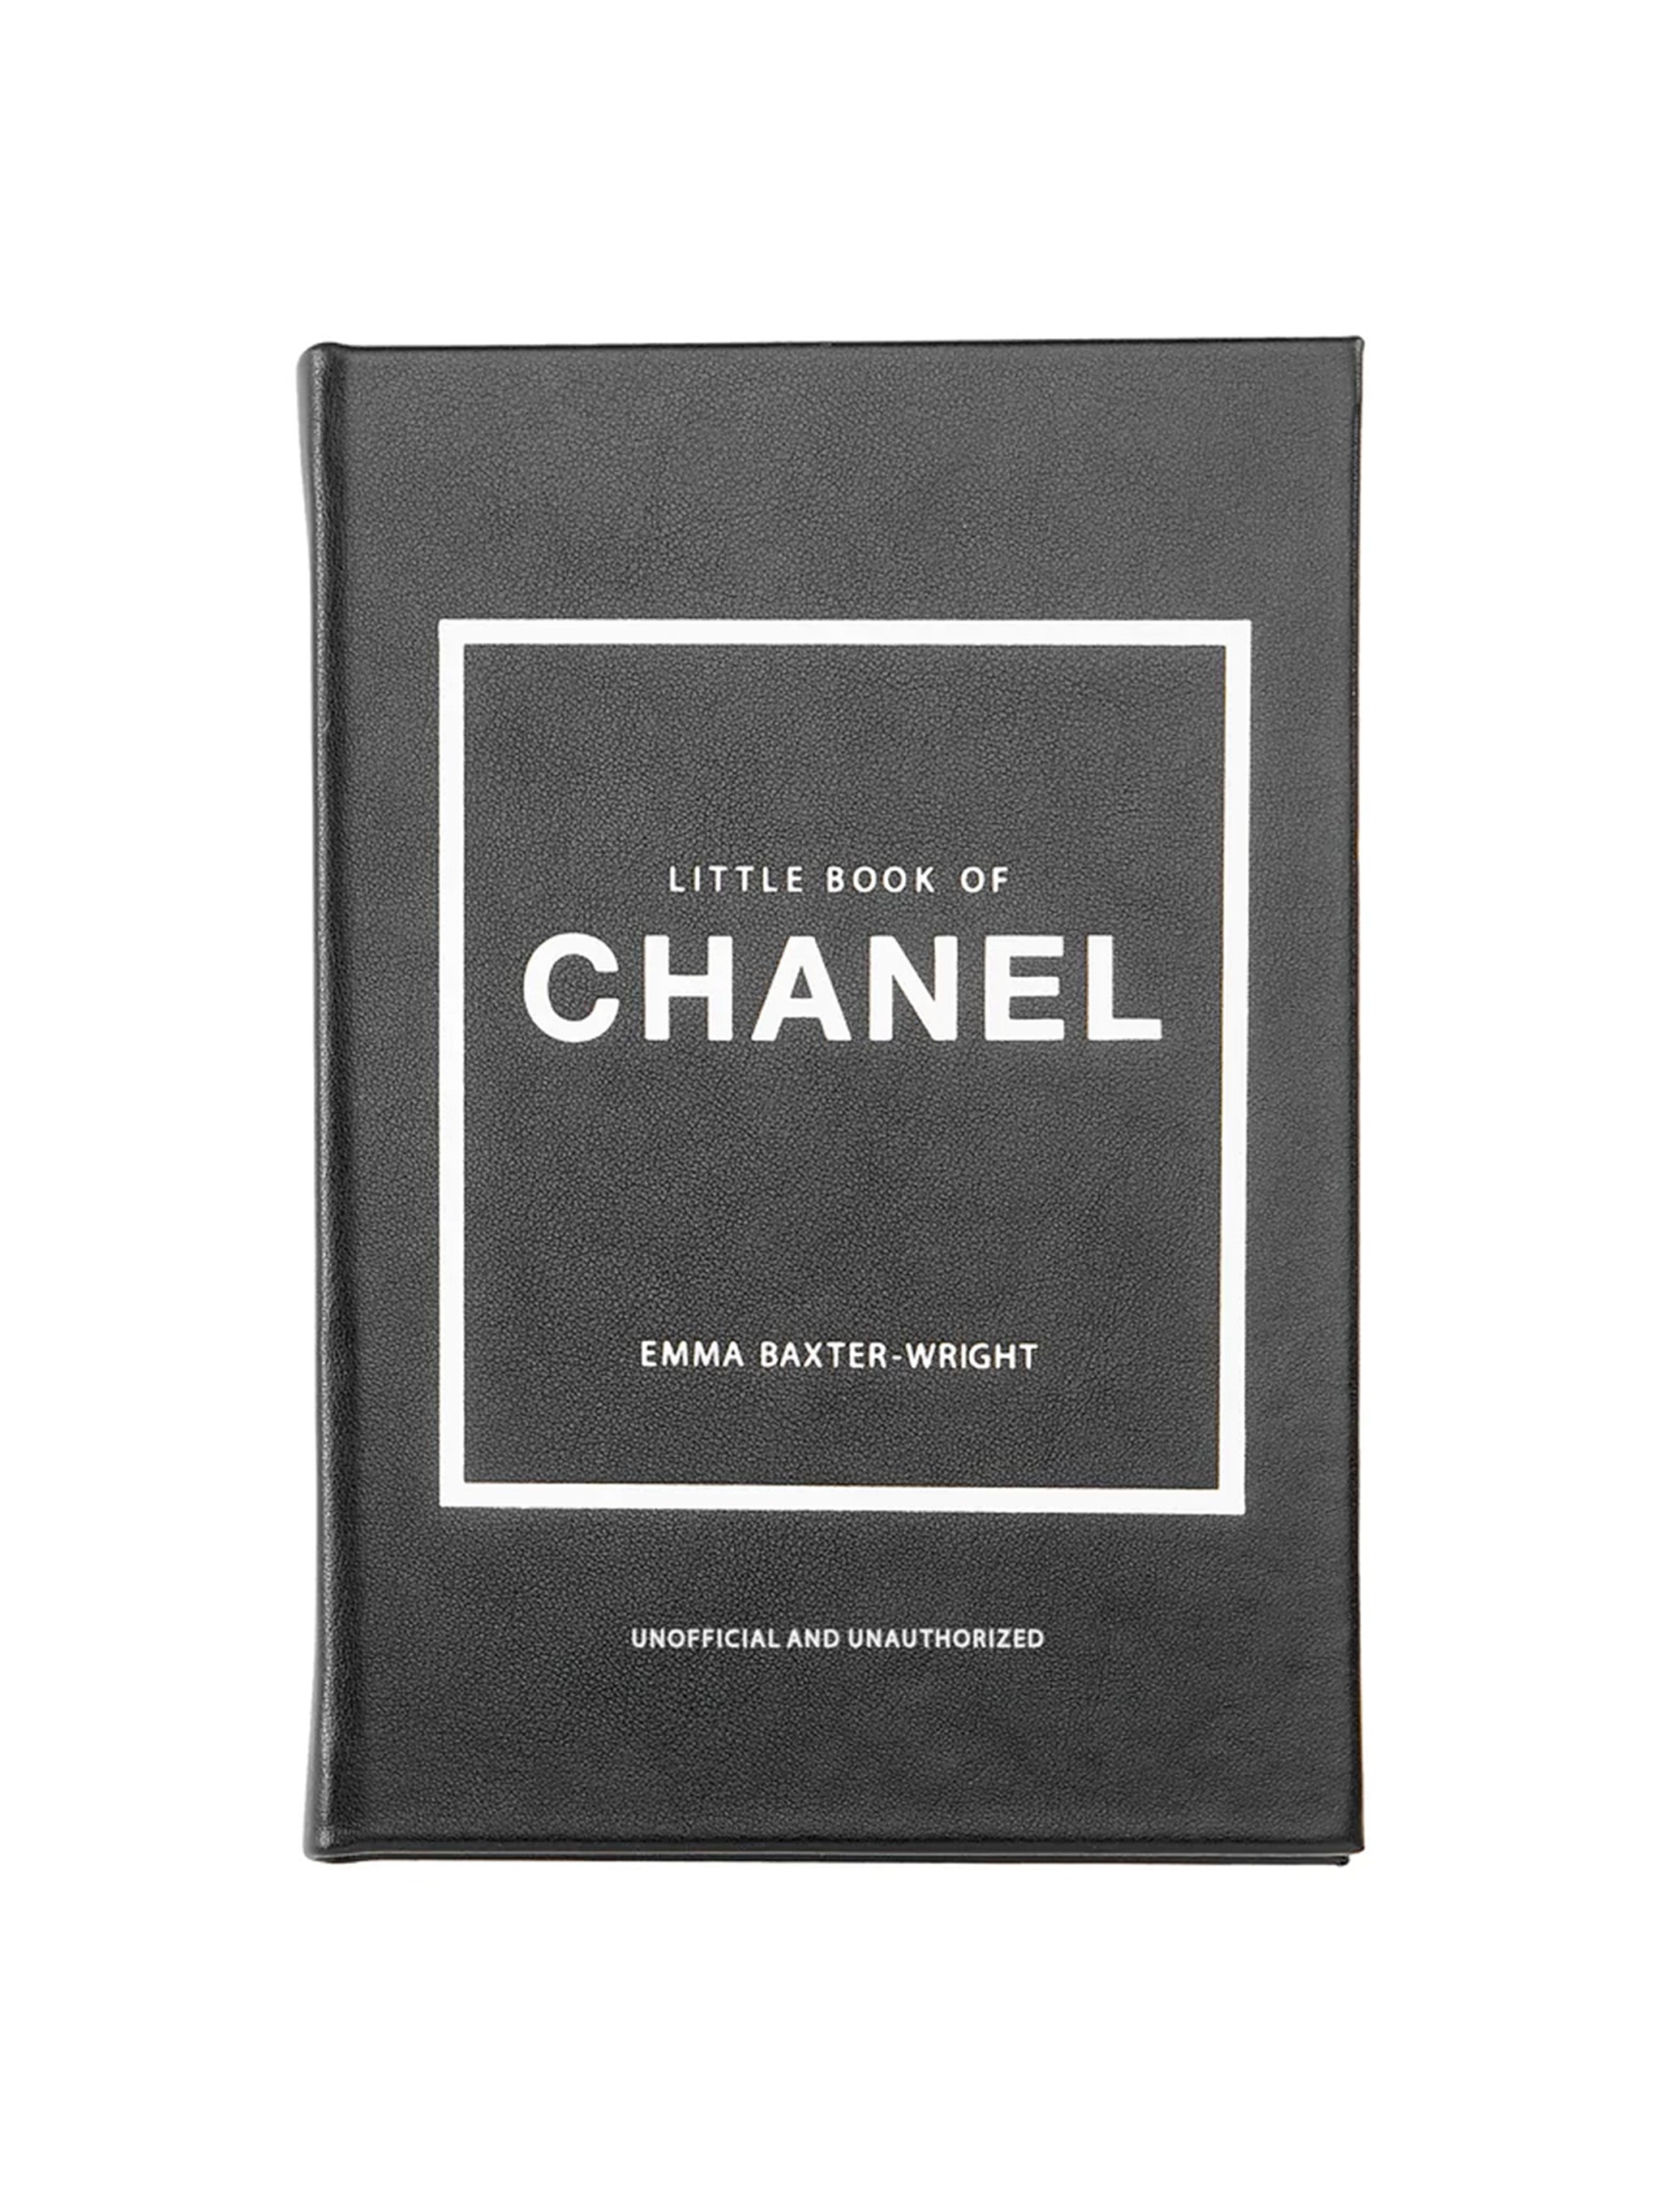 Coco Chanel: Revolutionary Woman (Hardcover)